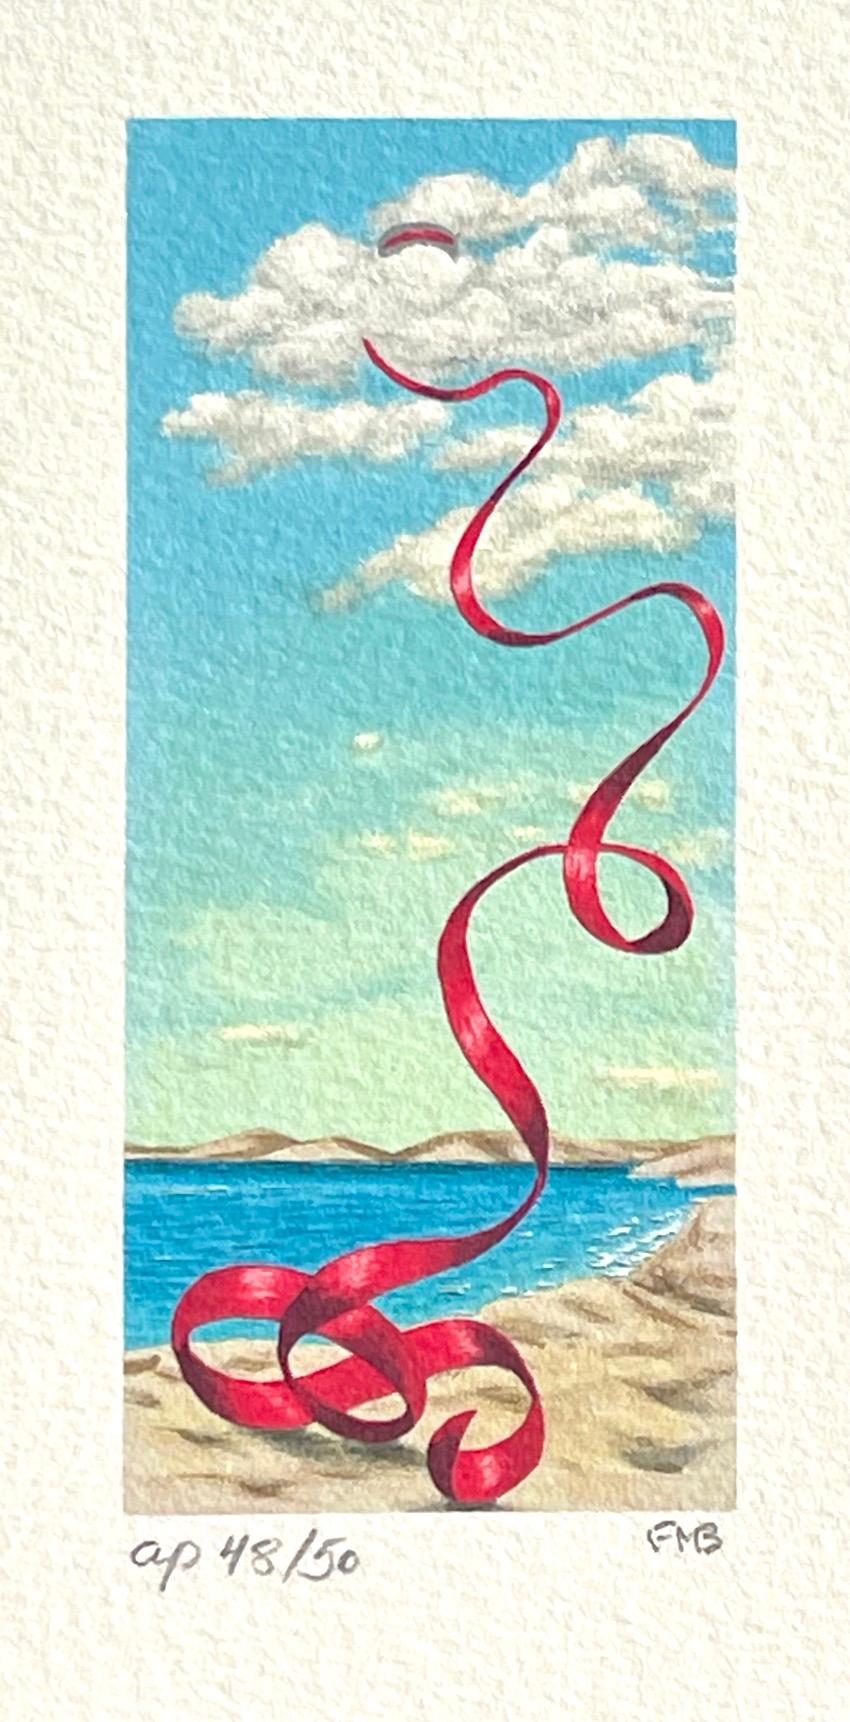 Fanny Brennan Still-Life Print - FALLING RIBBON Signed Mini Lithograph, Red Satin, Surreal Beach Scene